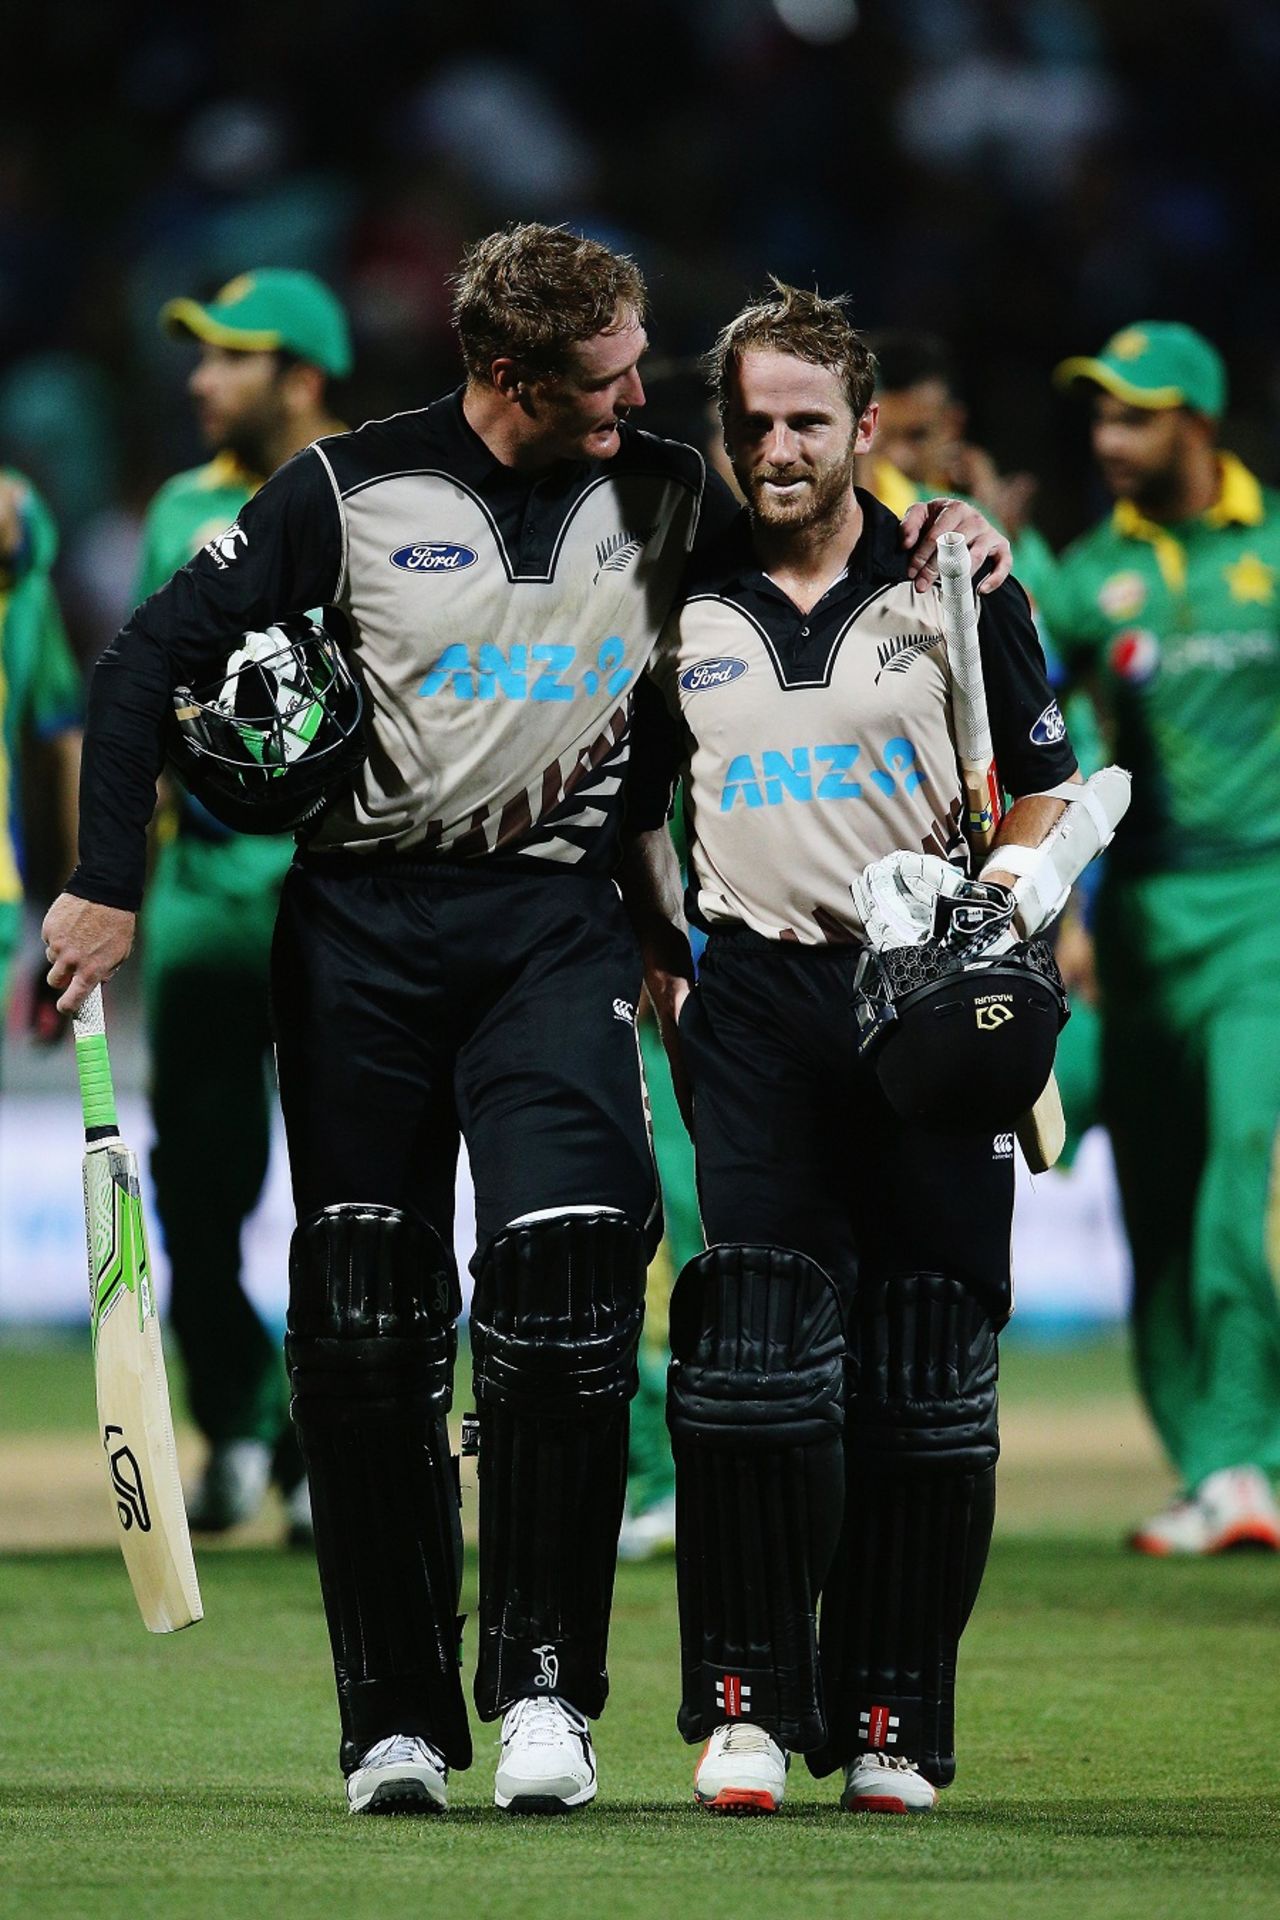 Martin Guptill and Kane Williamson walk off after securing a ten-wicket win,  New Zealand v Pakistan, 2nd T20I, Hamilton, January 17, 2016